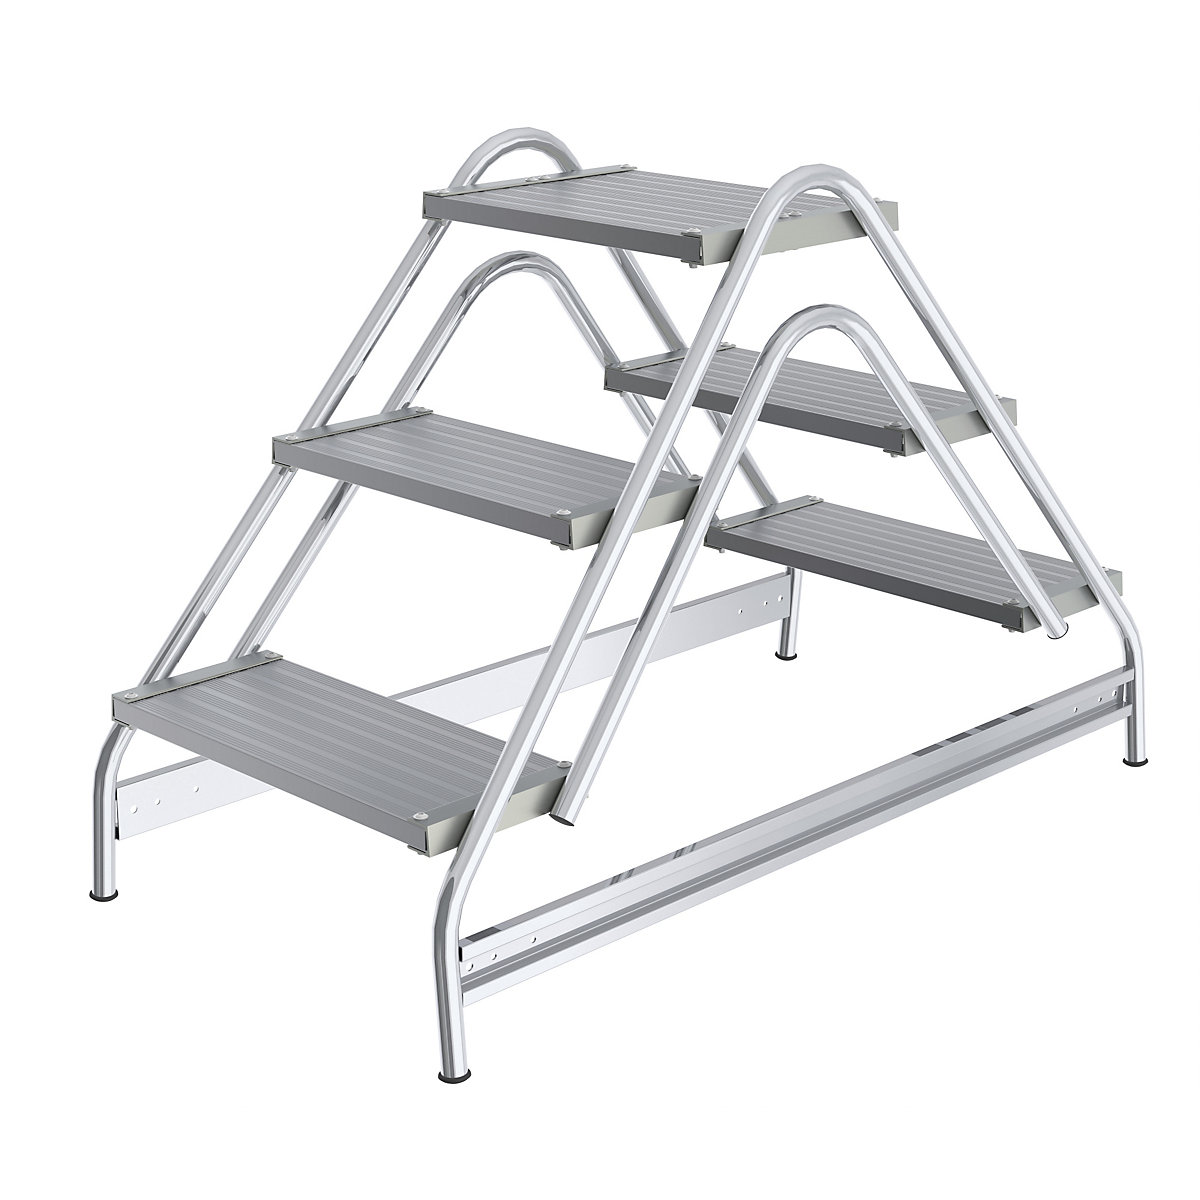 Aluminium work platform – MUNK, steps made of ribbed aluminium, double sided access, 3 steps-4